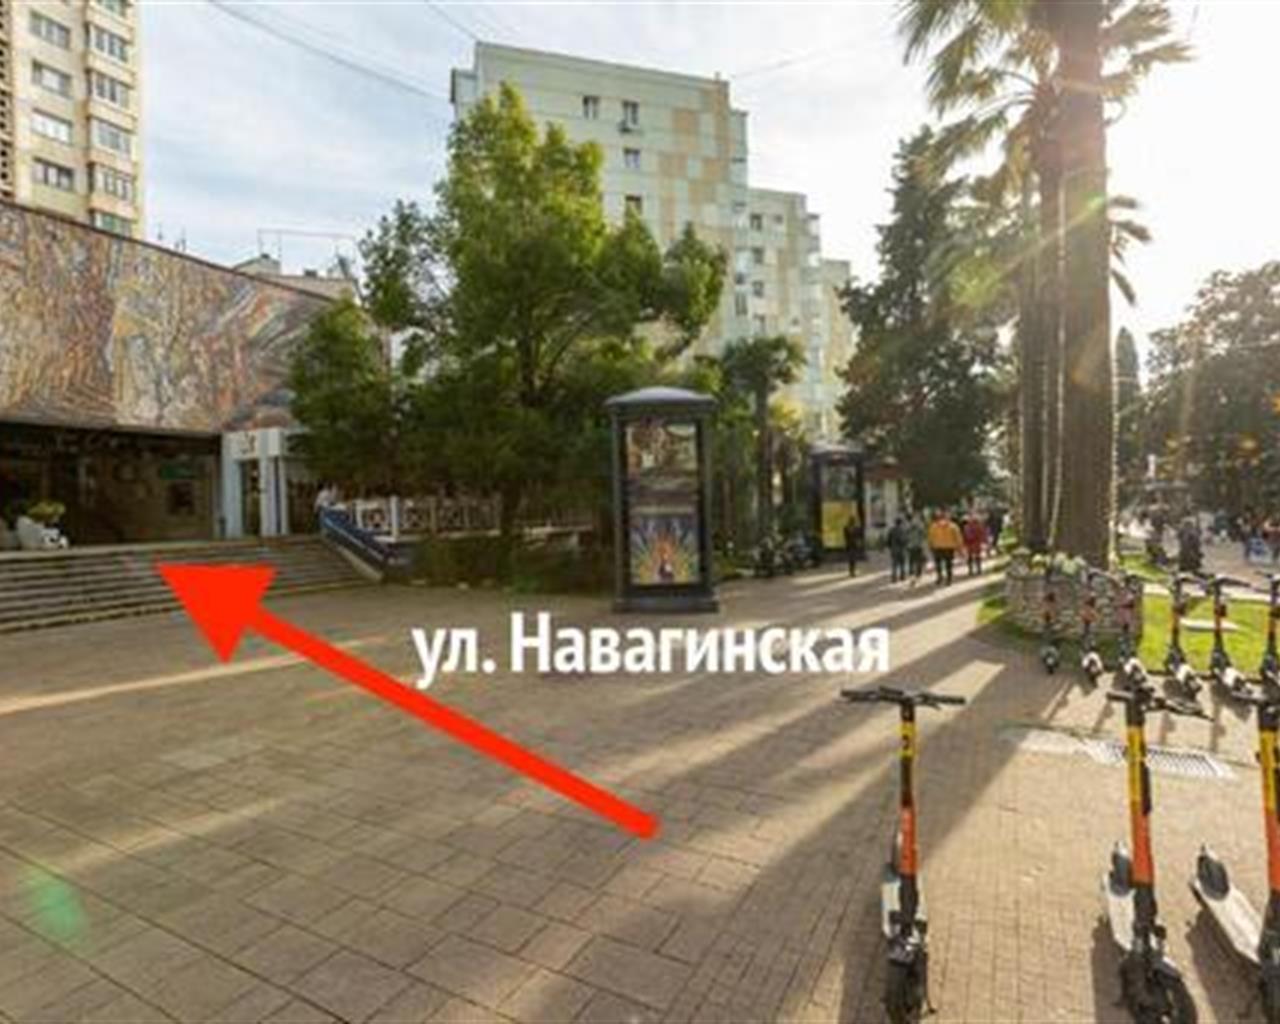 "Sochi Gallery Park"